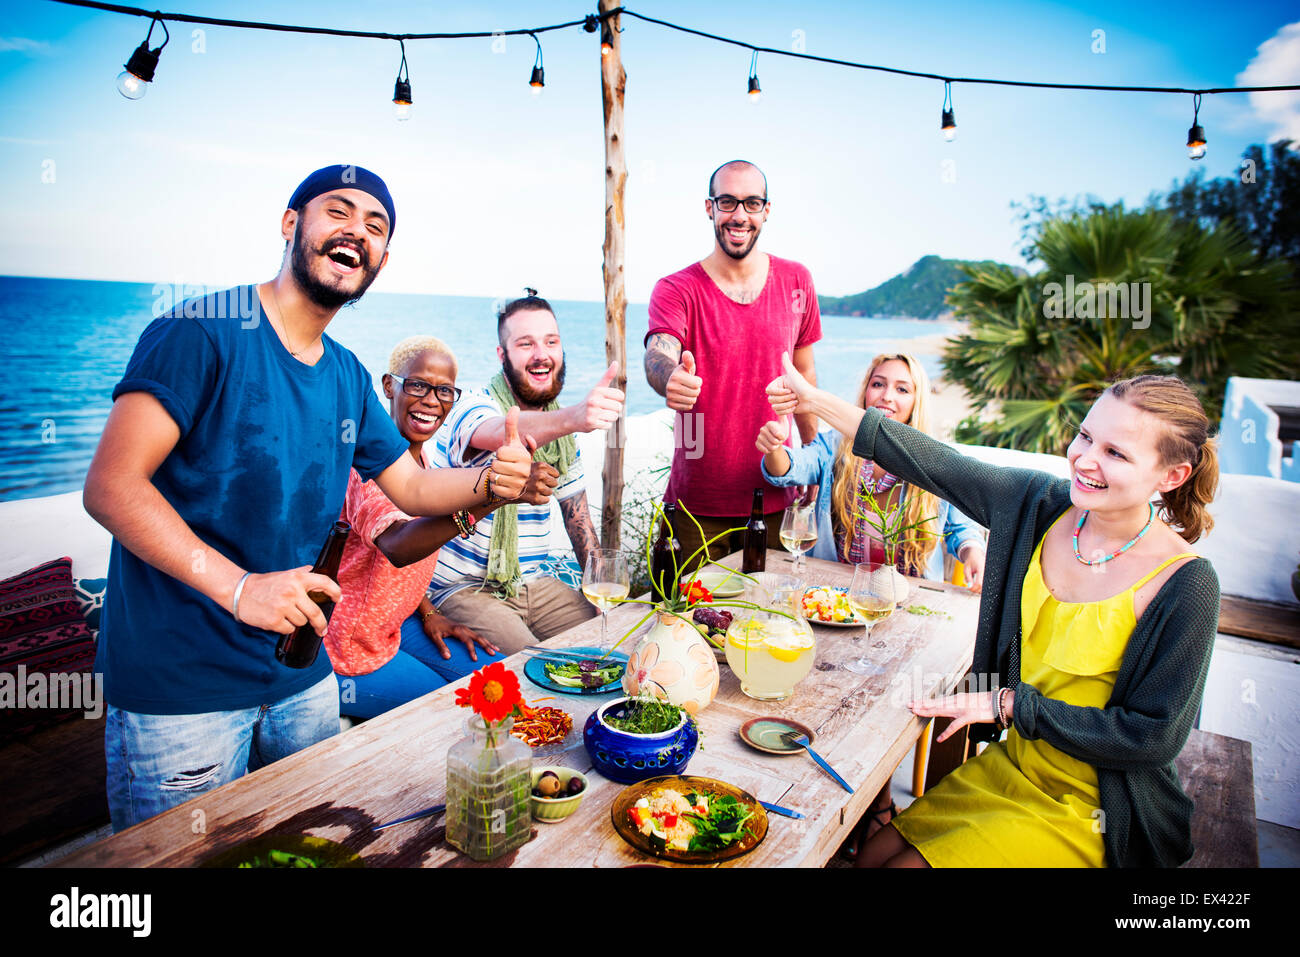 Beach Summer Dinner Party Celebration Concept Stock Photo